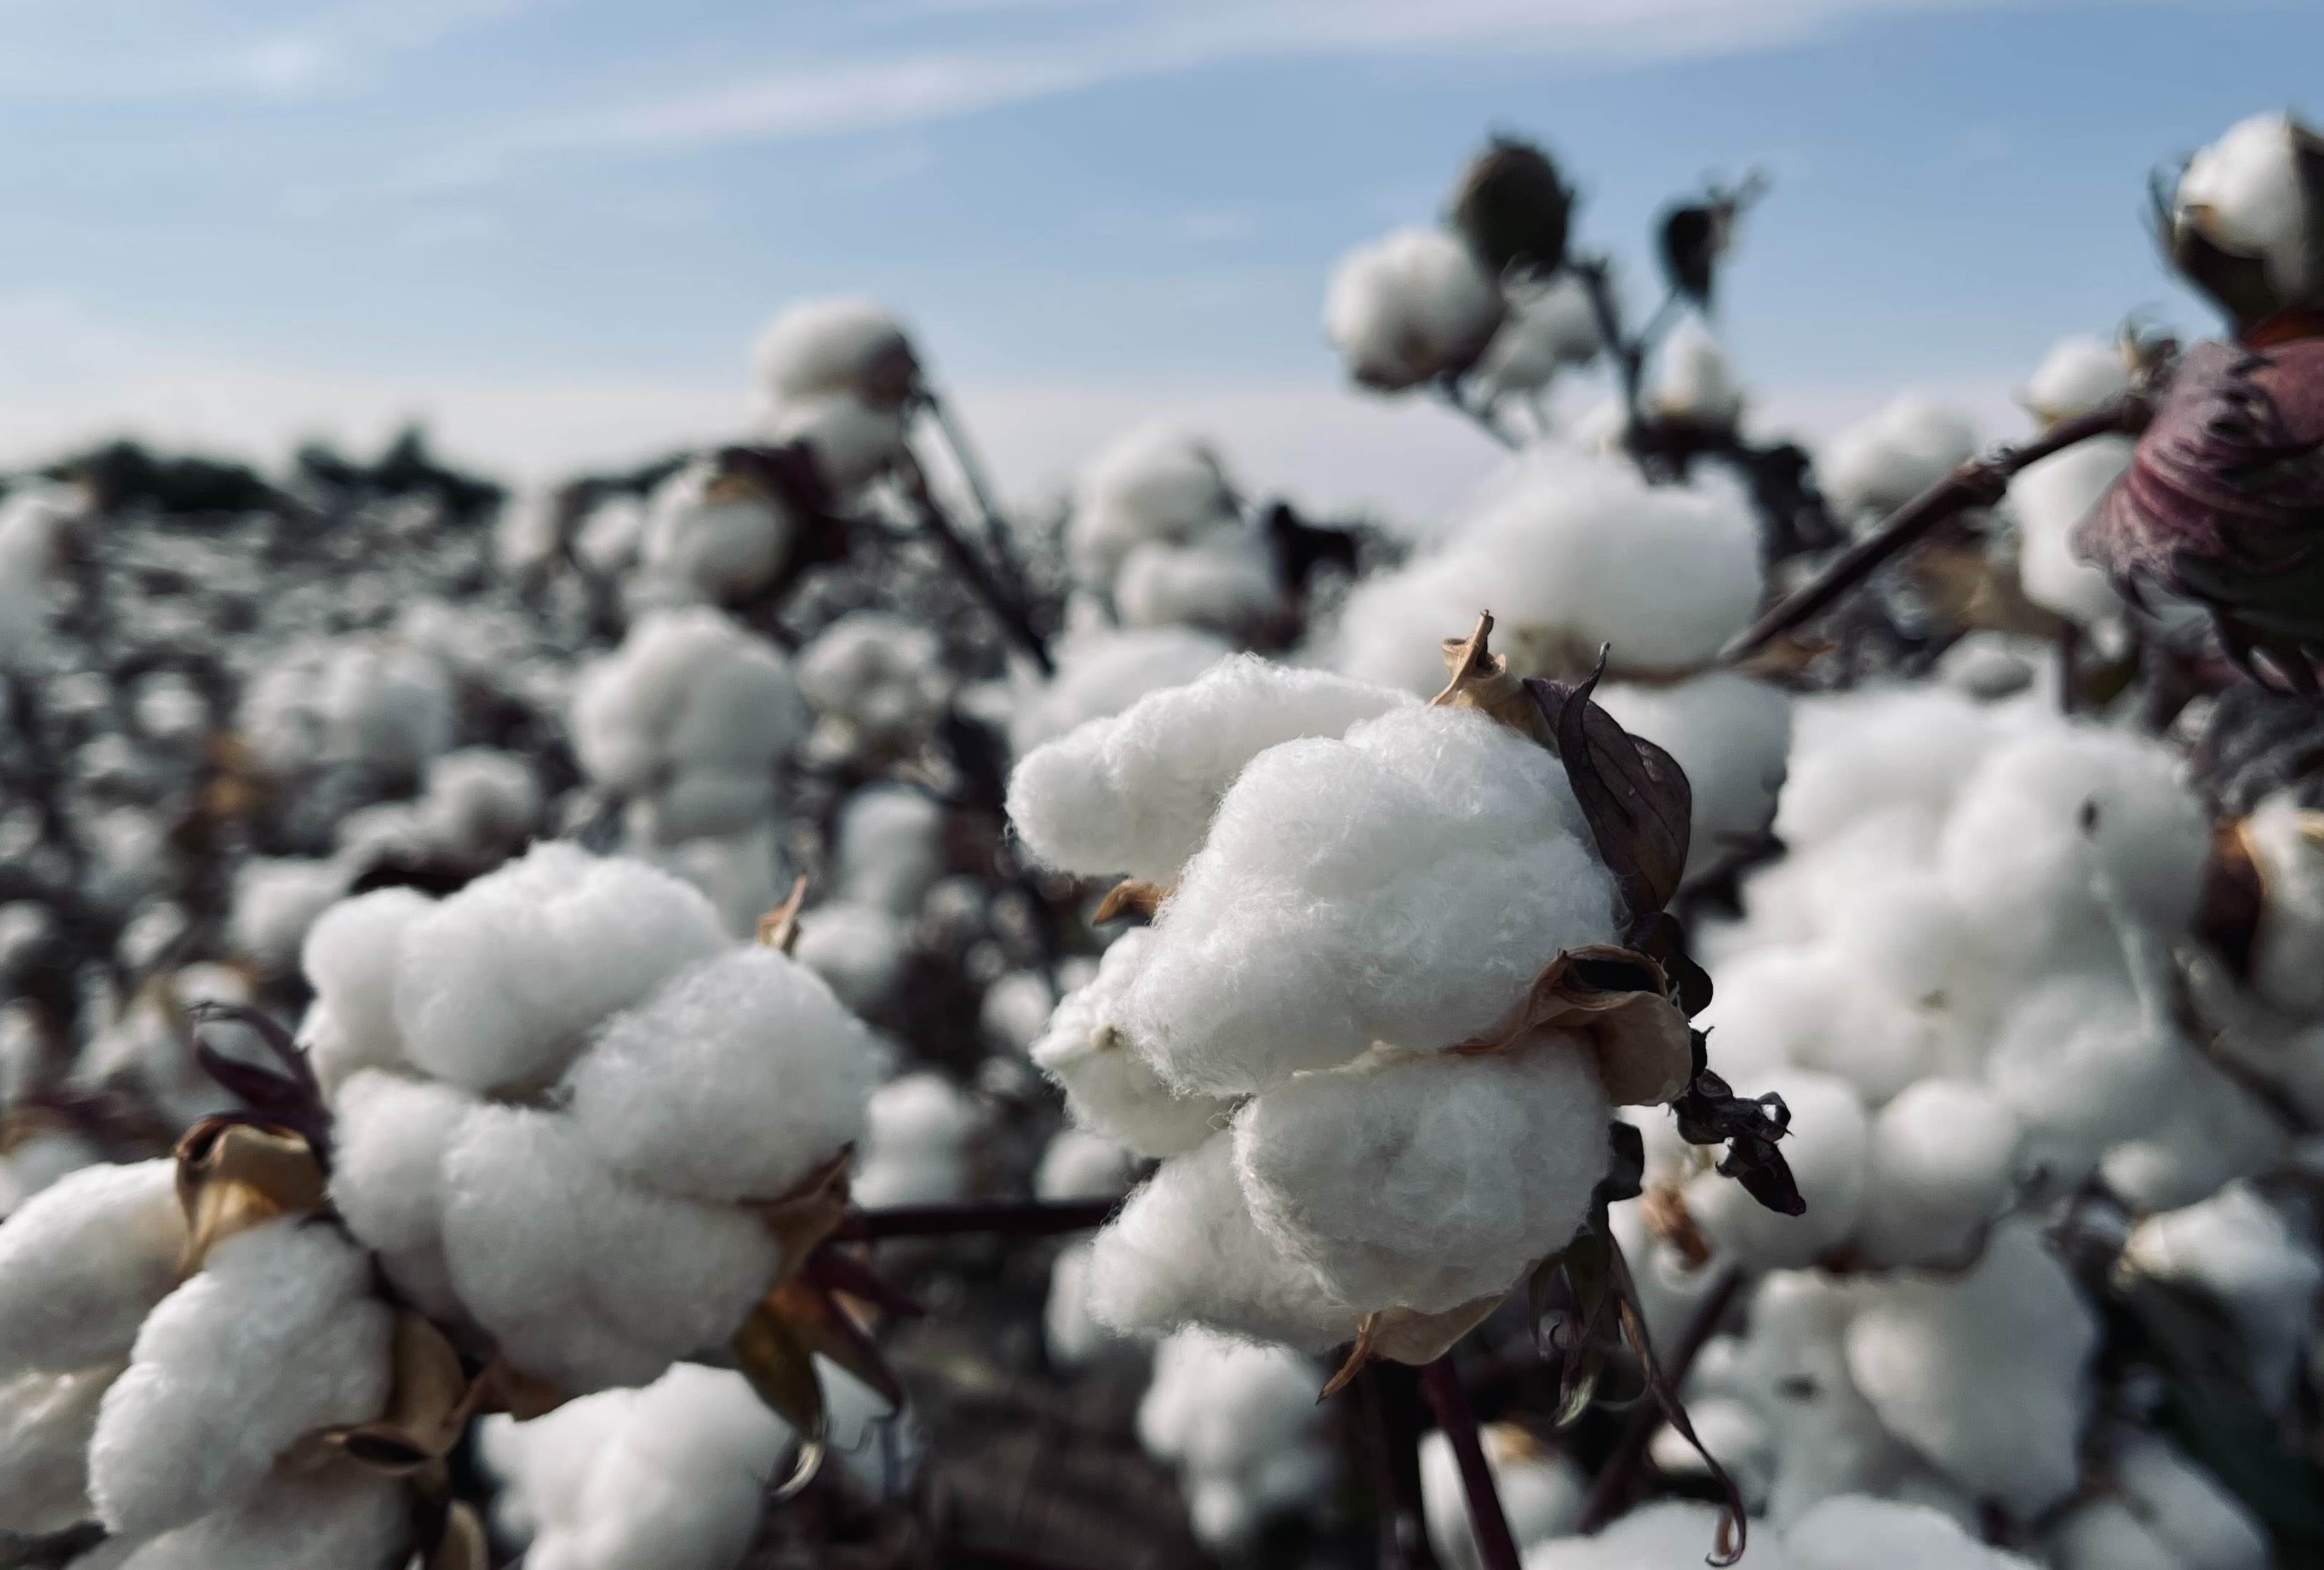 Orta upholds GMO-free Turkish cotton                                                                                                                                                                    